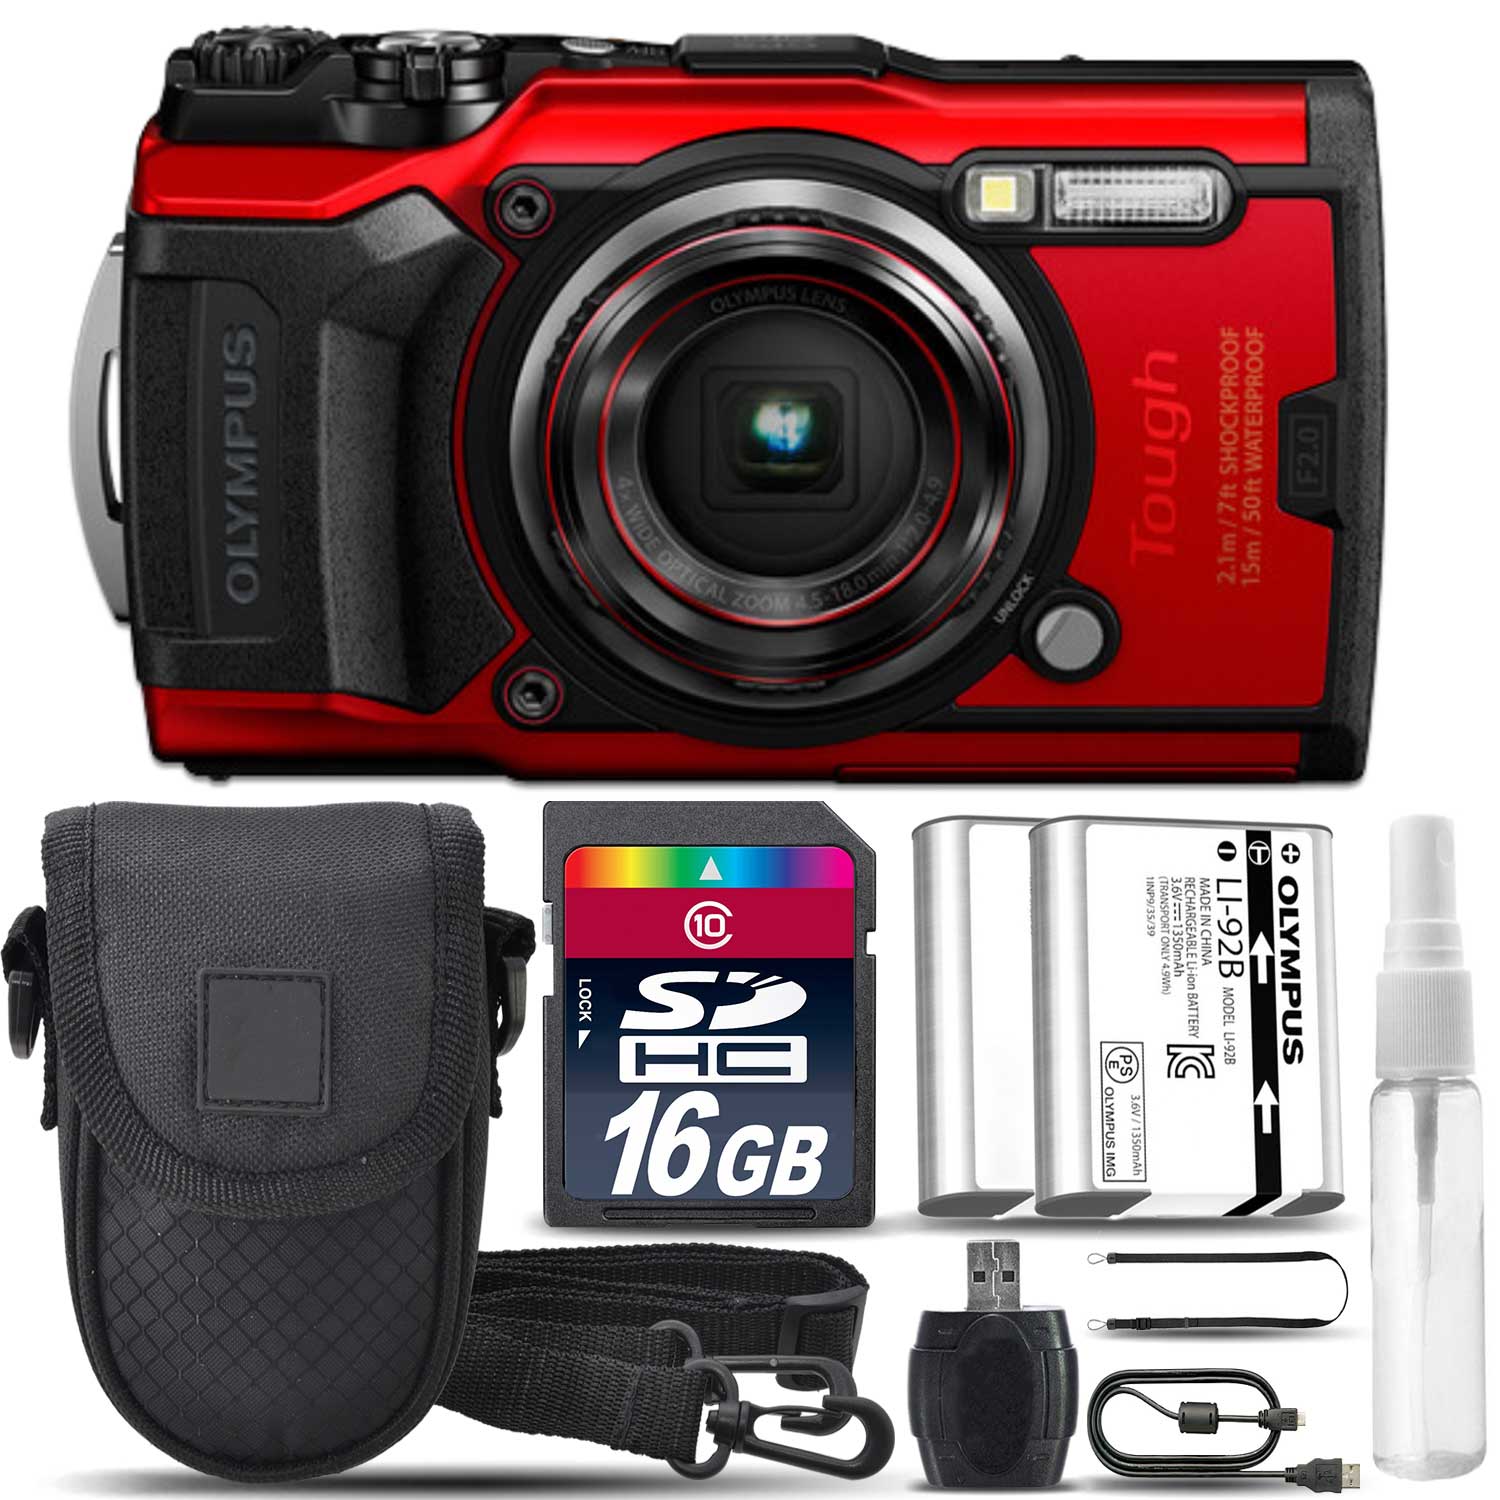 Stylus TOUGH TG-6 Digital Waterproof Camera Red + Case +EXT BATT + 16GB *FREE SHIPPING*